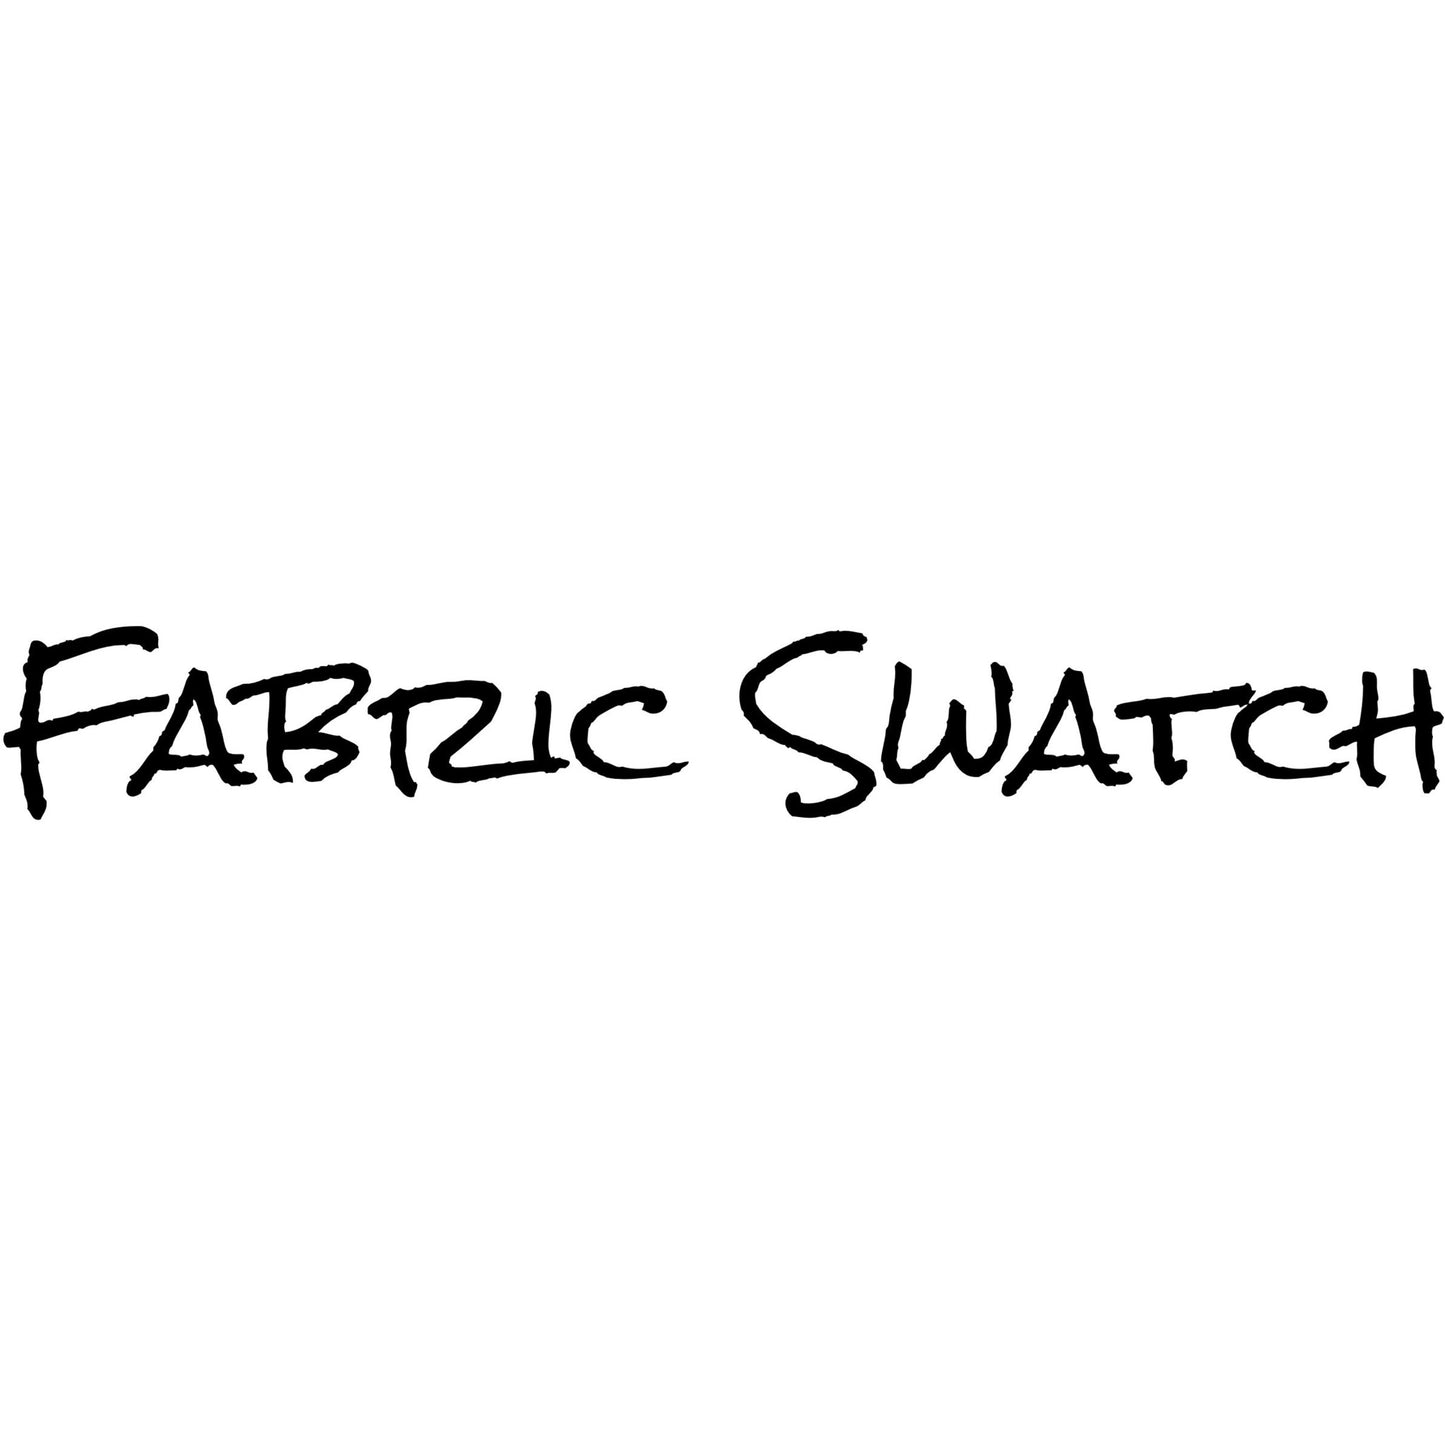 Fabric swatch - Flyfabricsourcing, Affordable fashion fabric, 